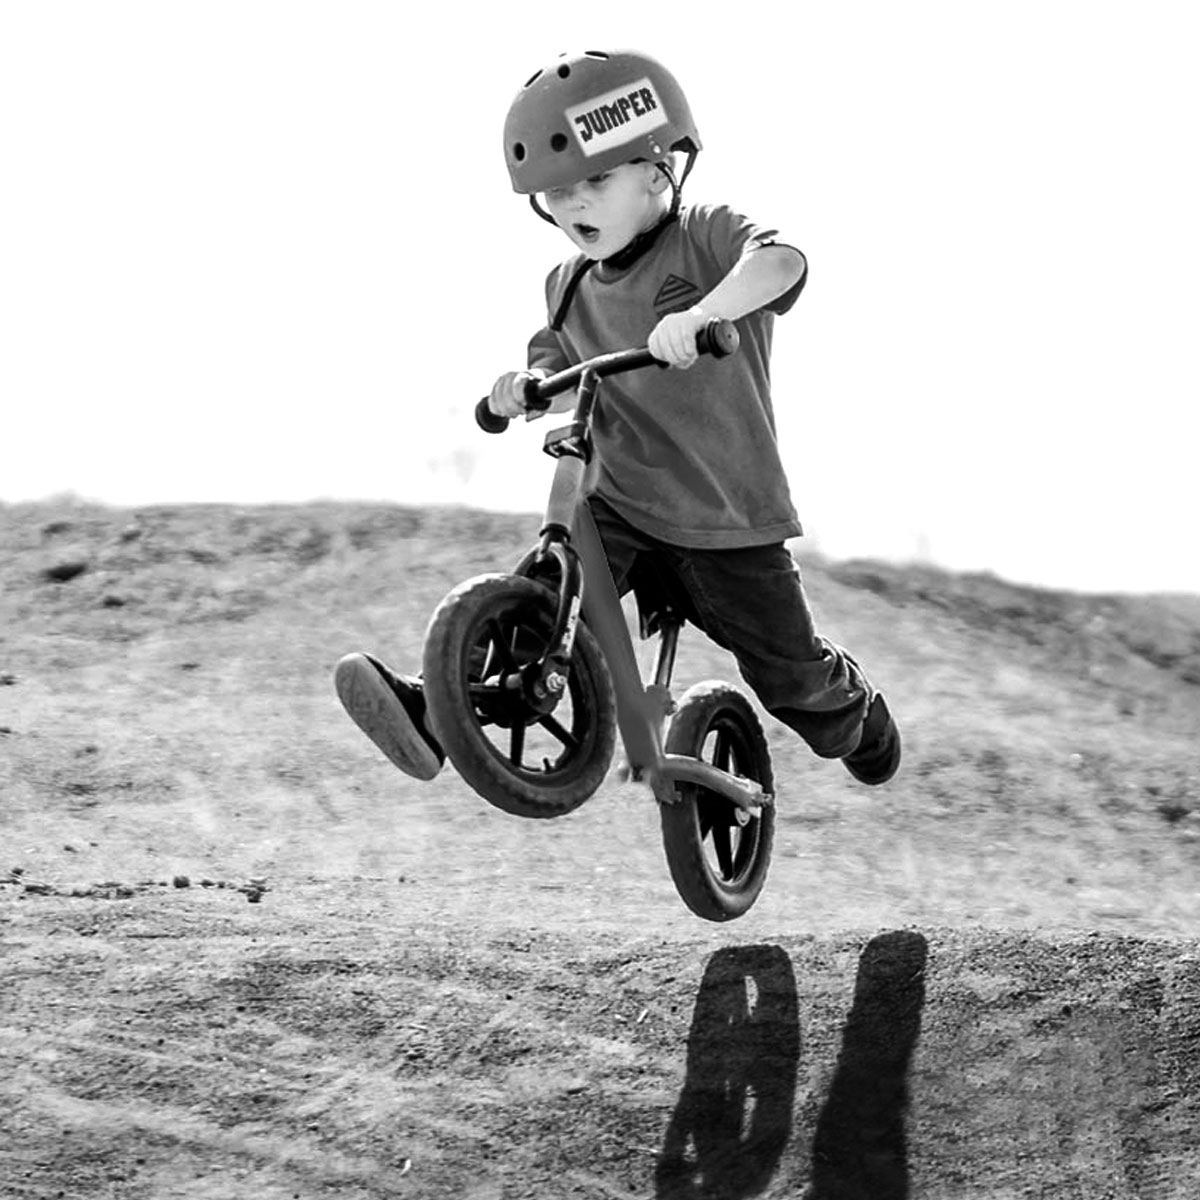 Camicleta Rembrandt Jumper - Bicicleta Sin Pedales Para Niños R12 